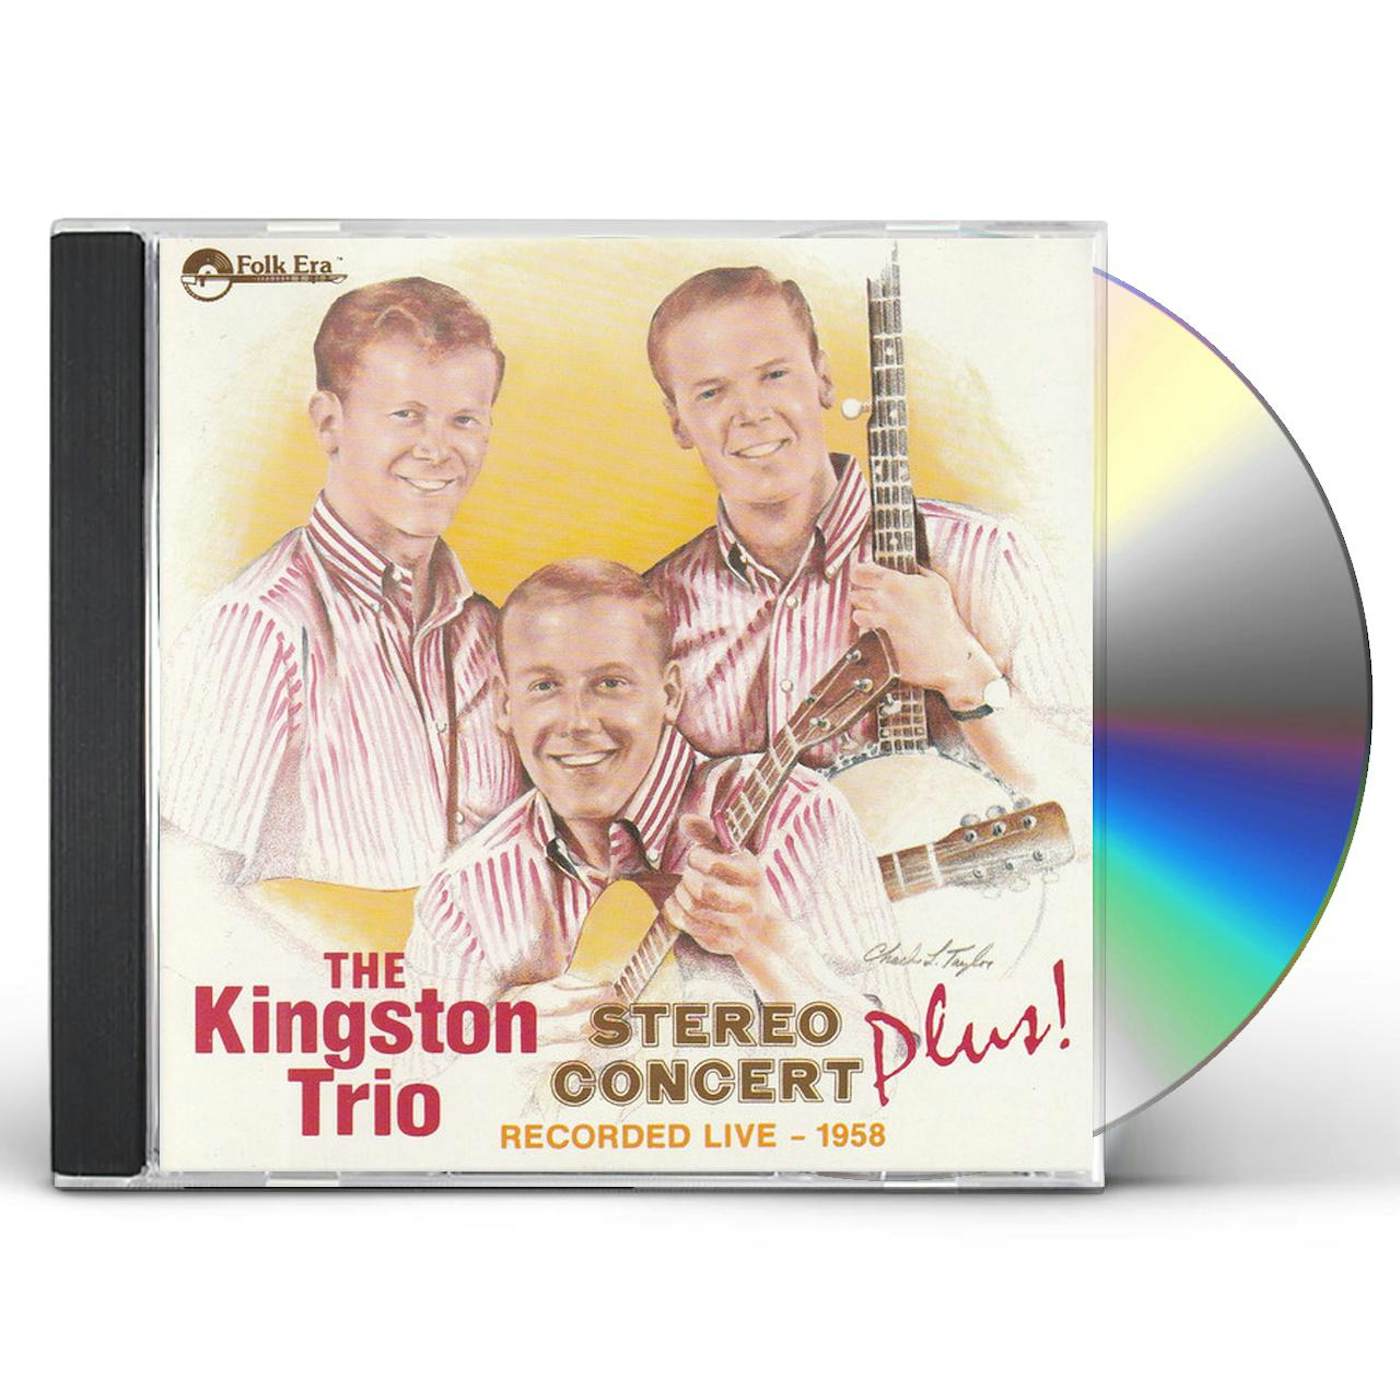 The Kingston Trio STEREO CONCERT PLUS CD